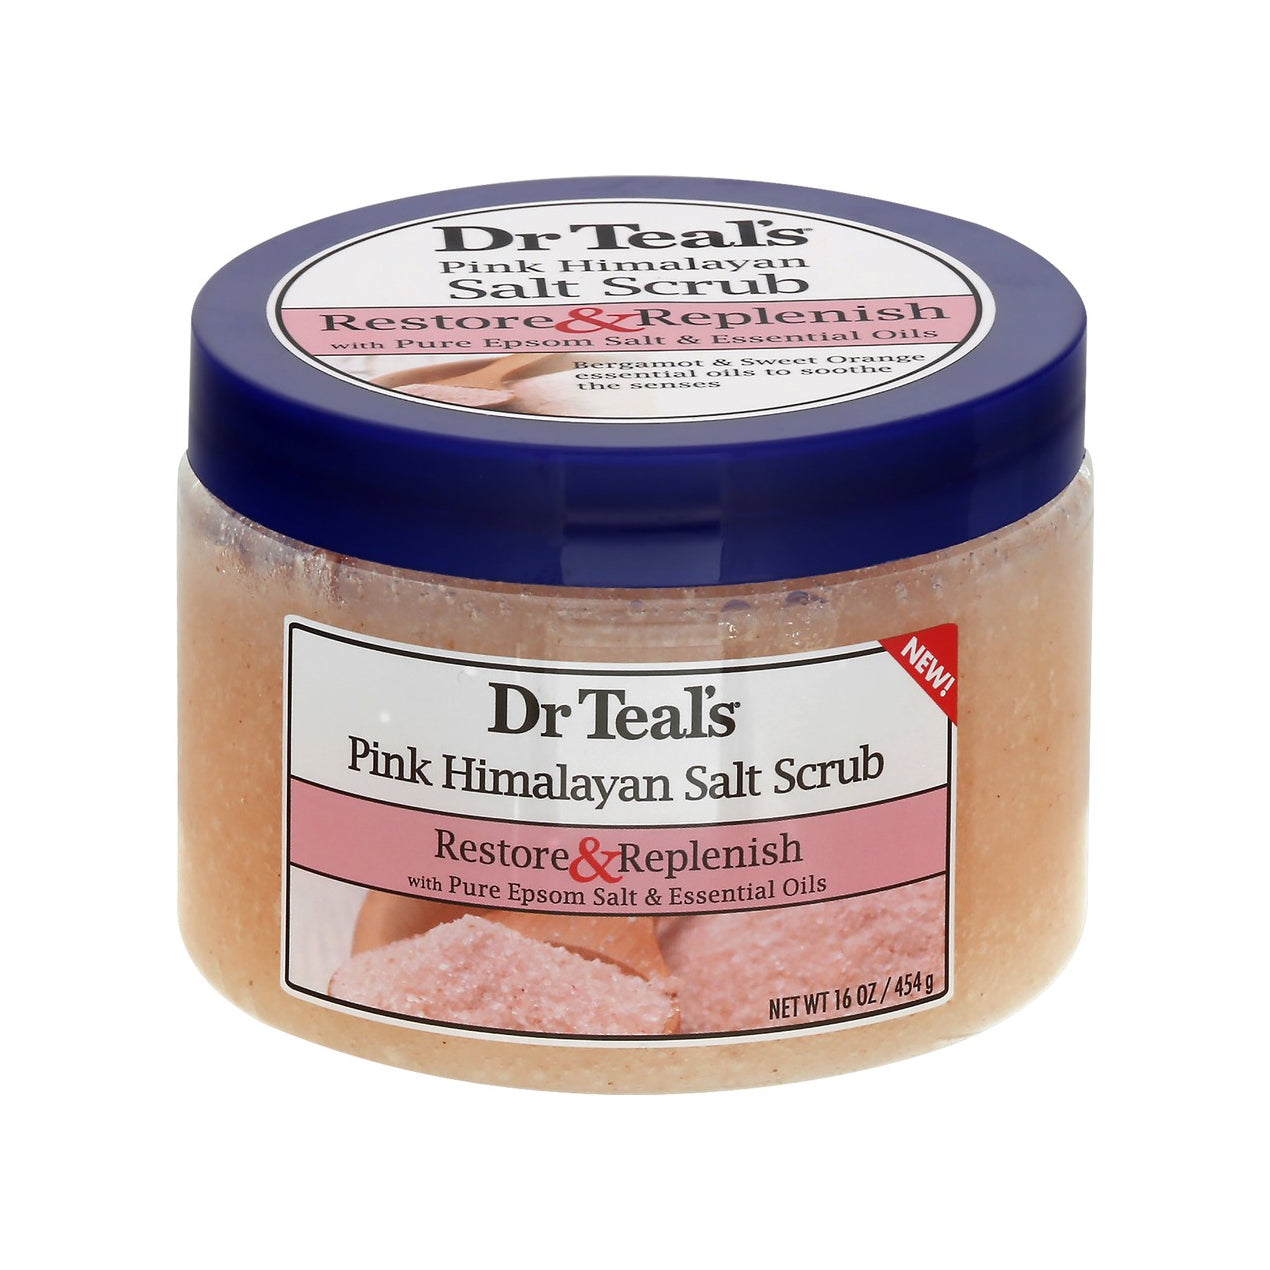 Dr Teal's Pink Himalayan Salt Scrub Restore & Replenish16 oz